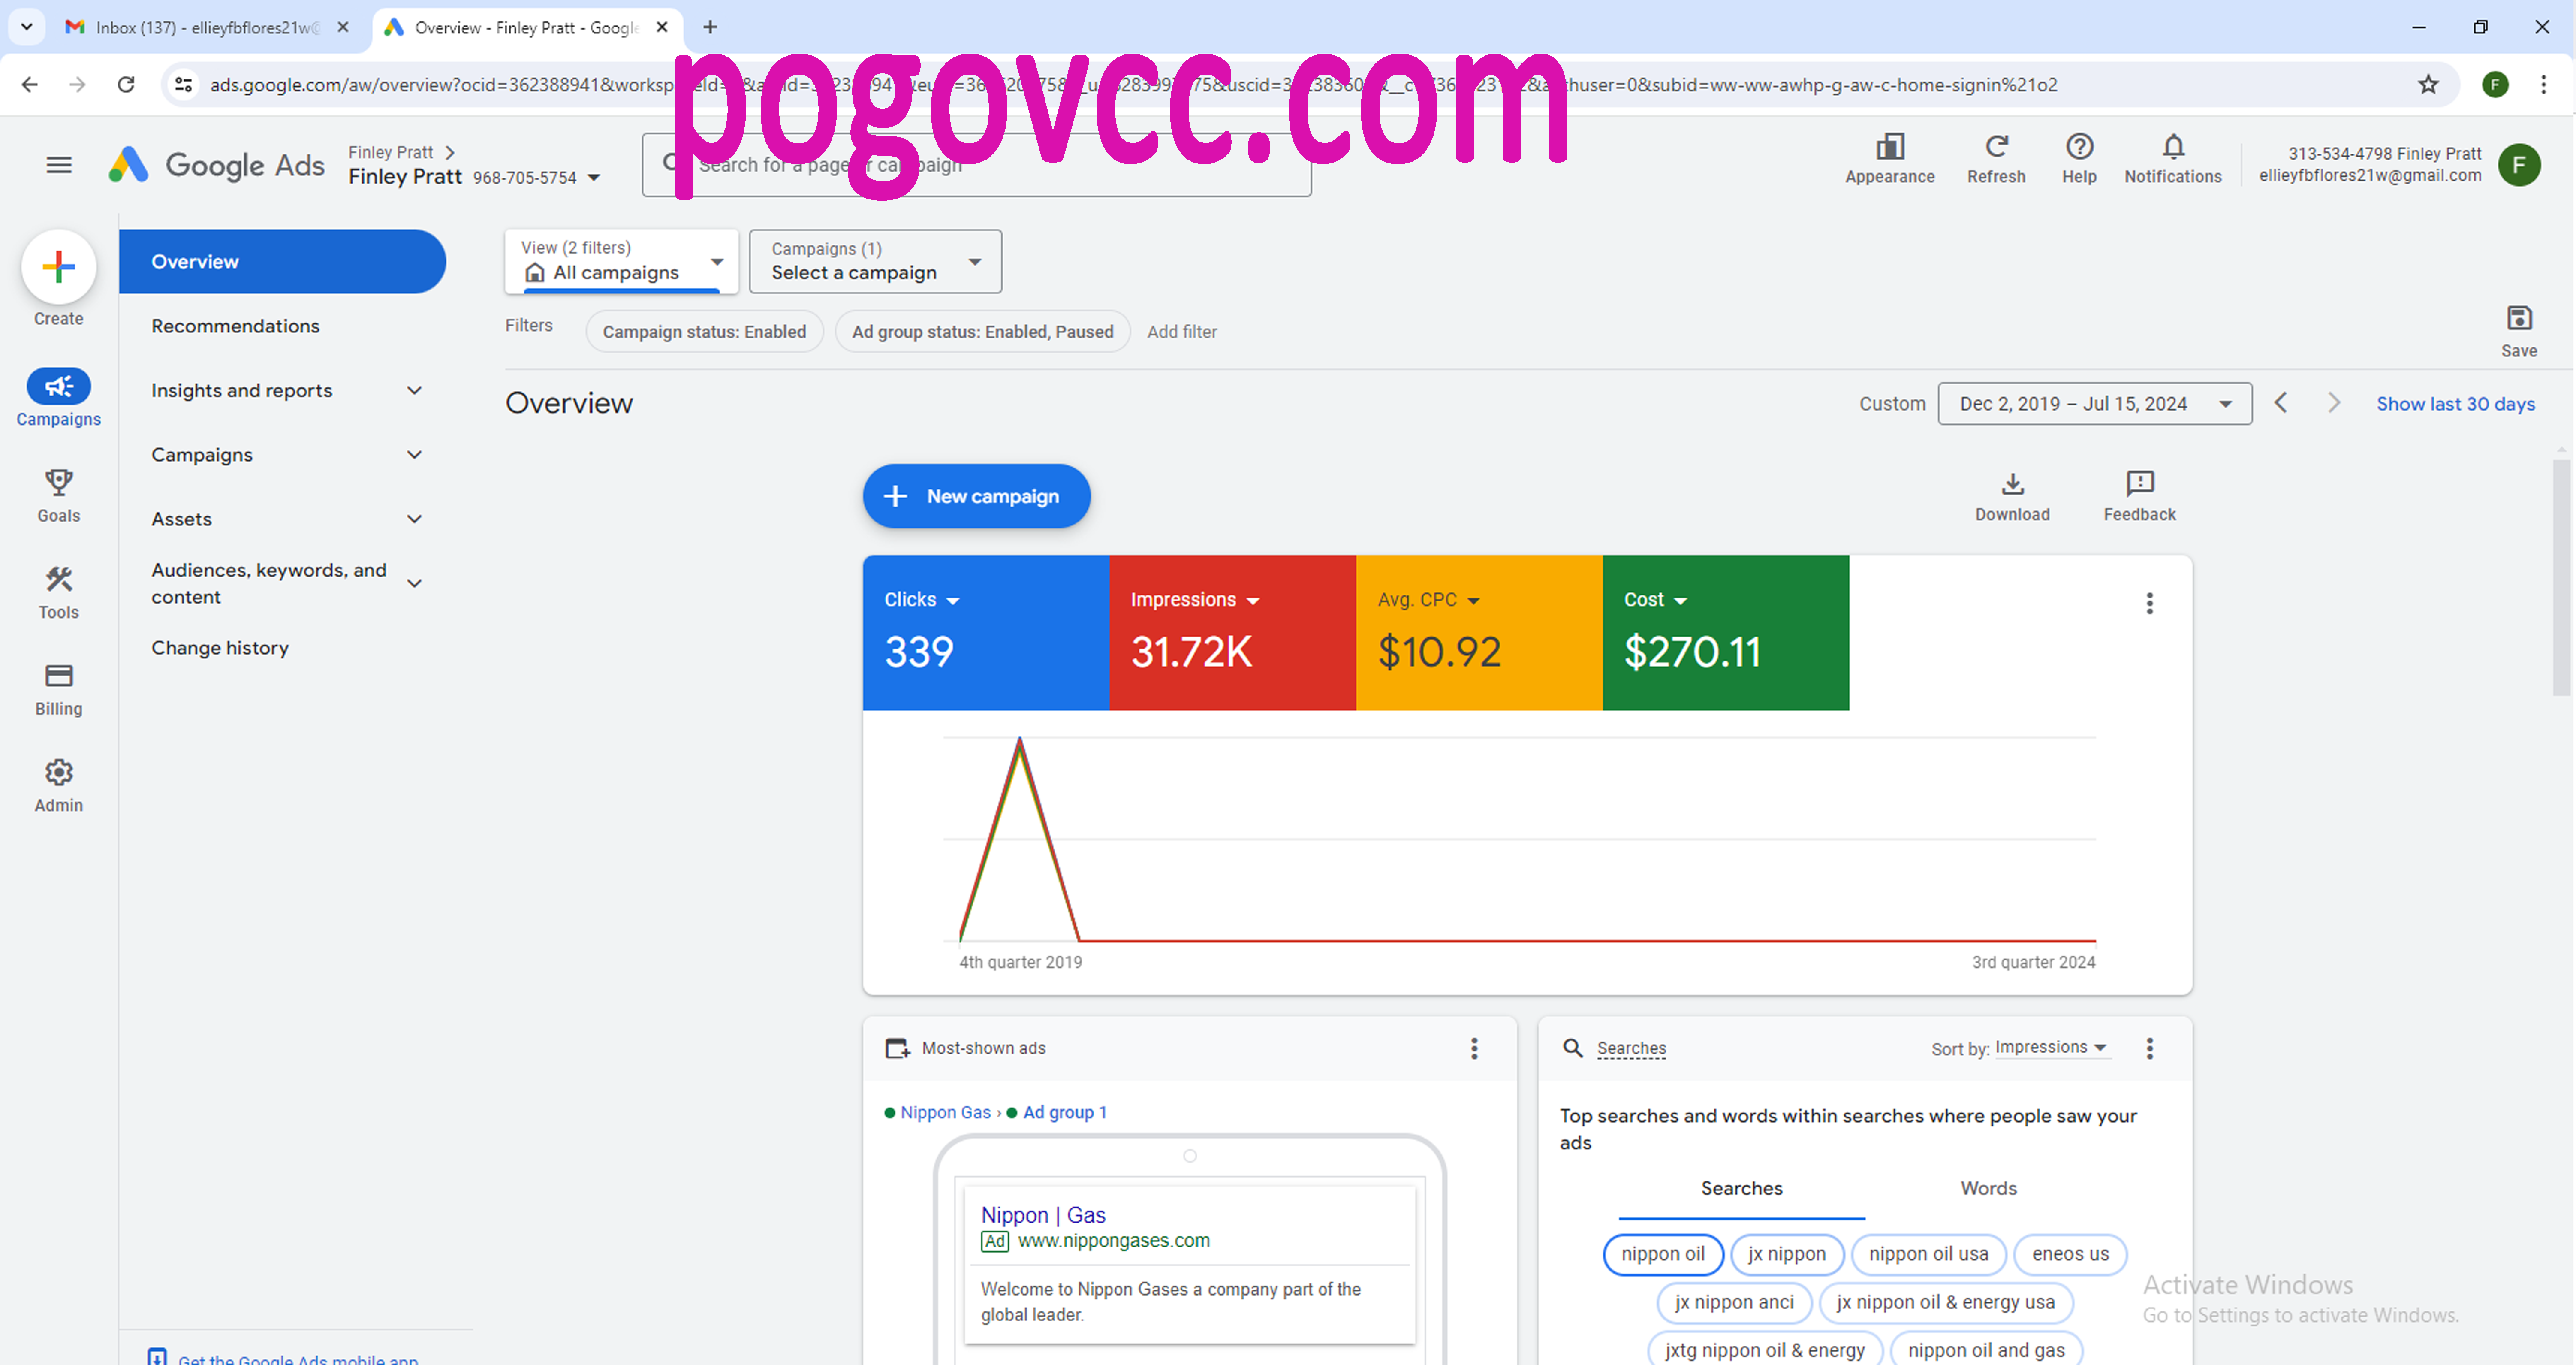 google ads account pogovcc